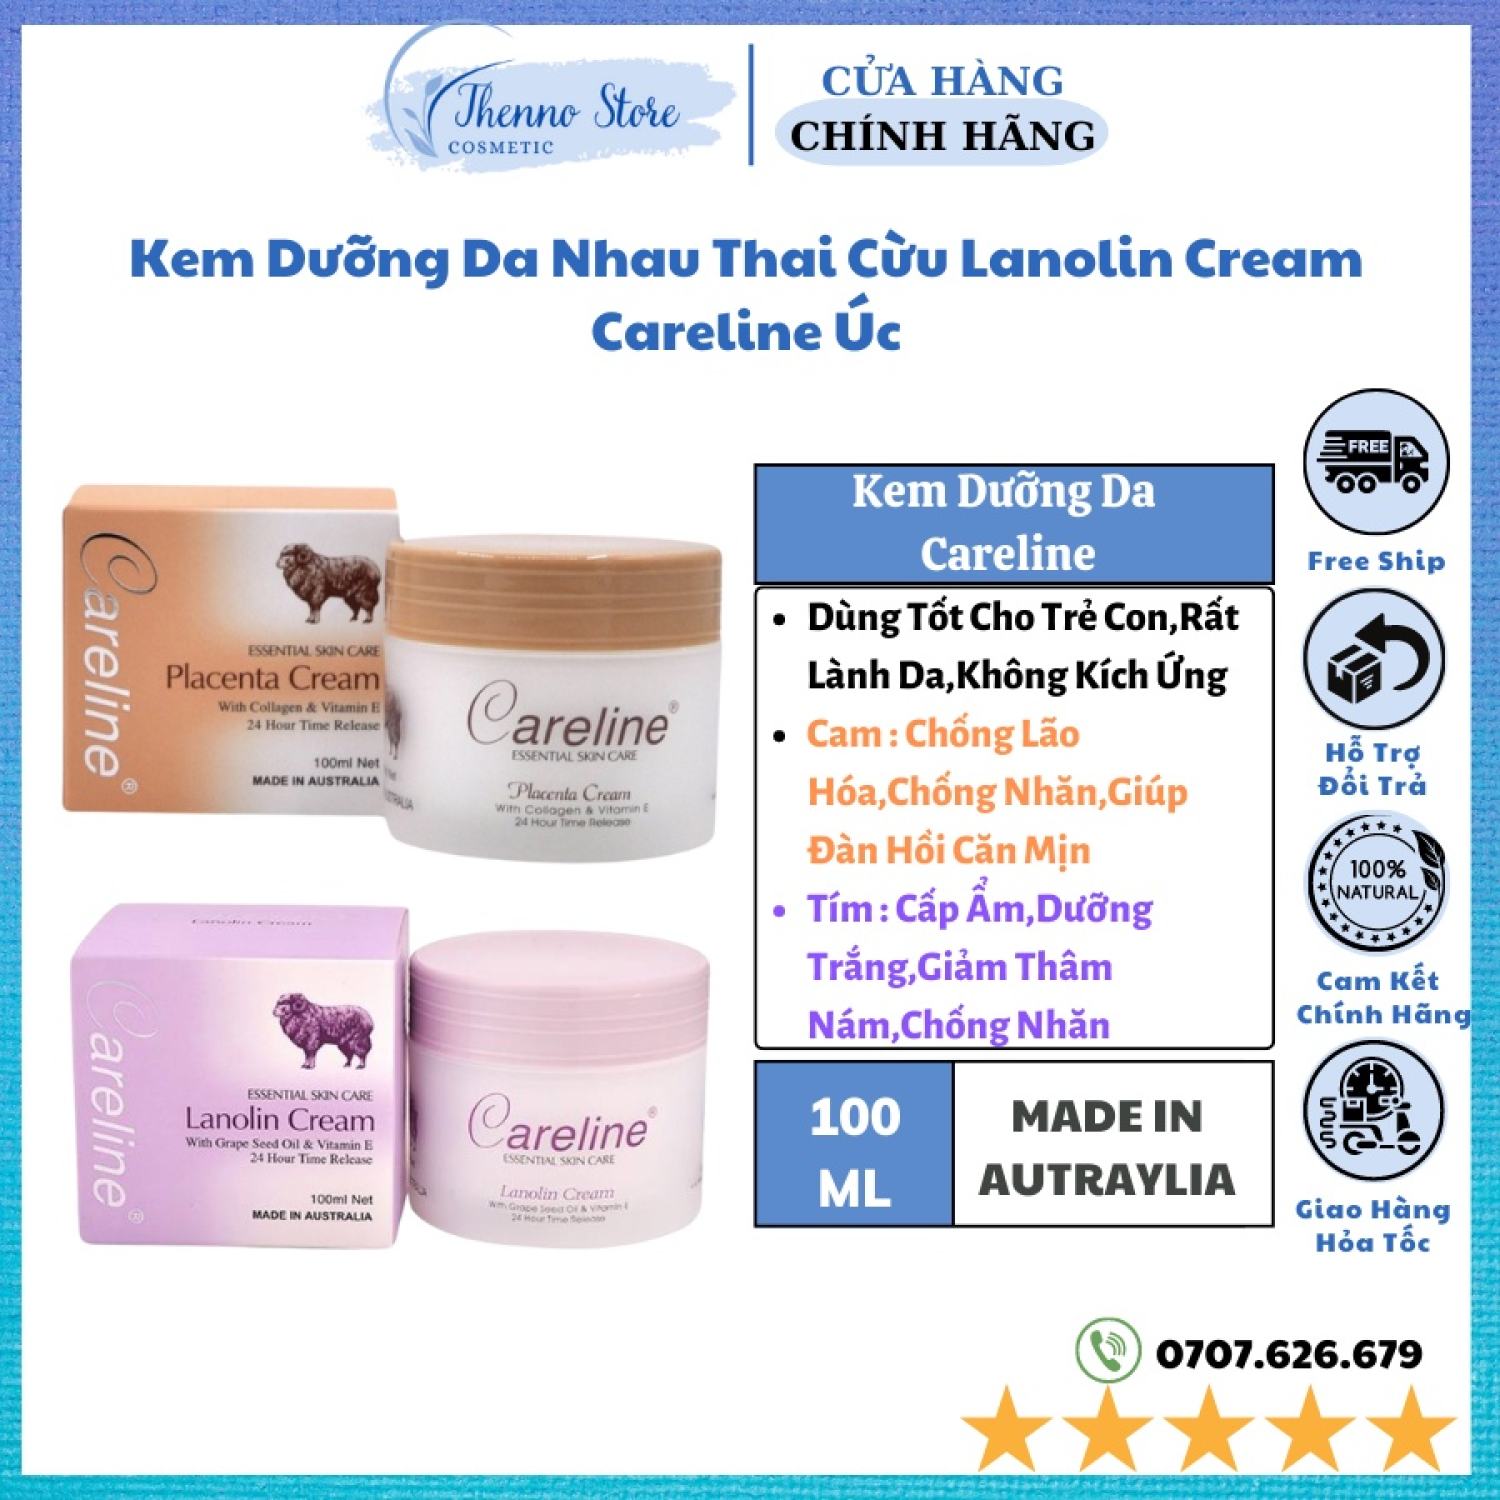 Kem Dưỡng Da Nhau Thai Cừu Lanolin Cream Careline Úc